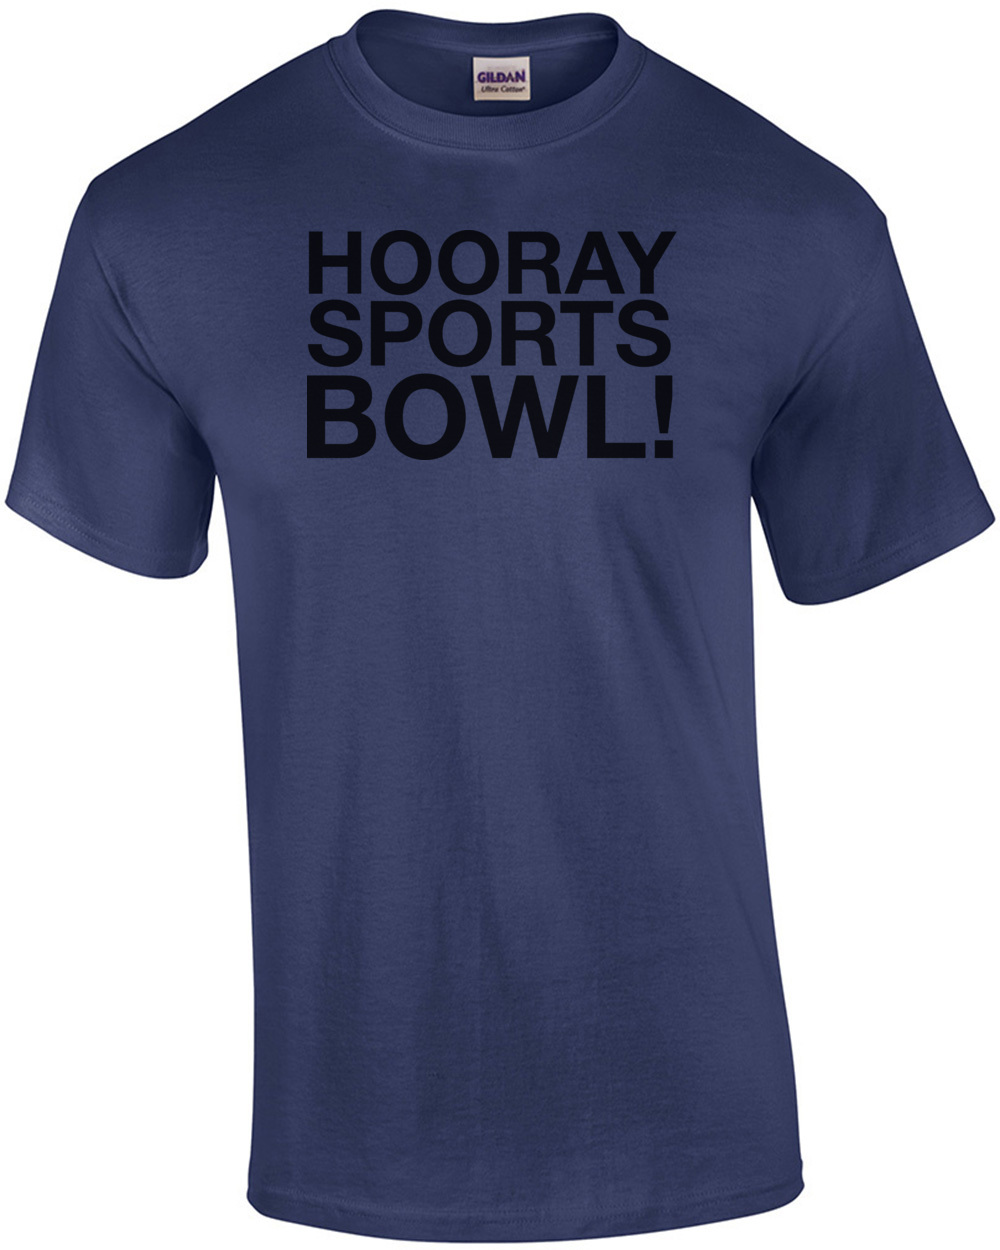 Hooray Sports Bowl Funny Super Bowl T-Shirt